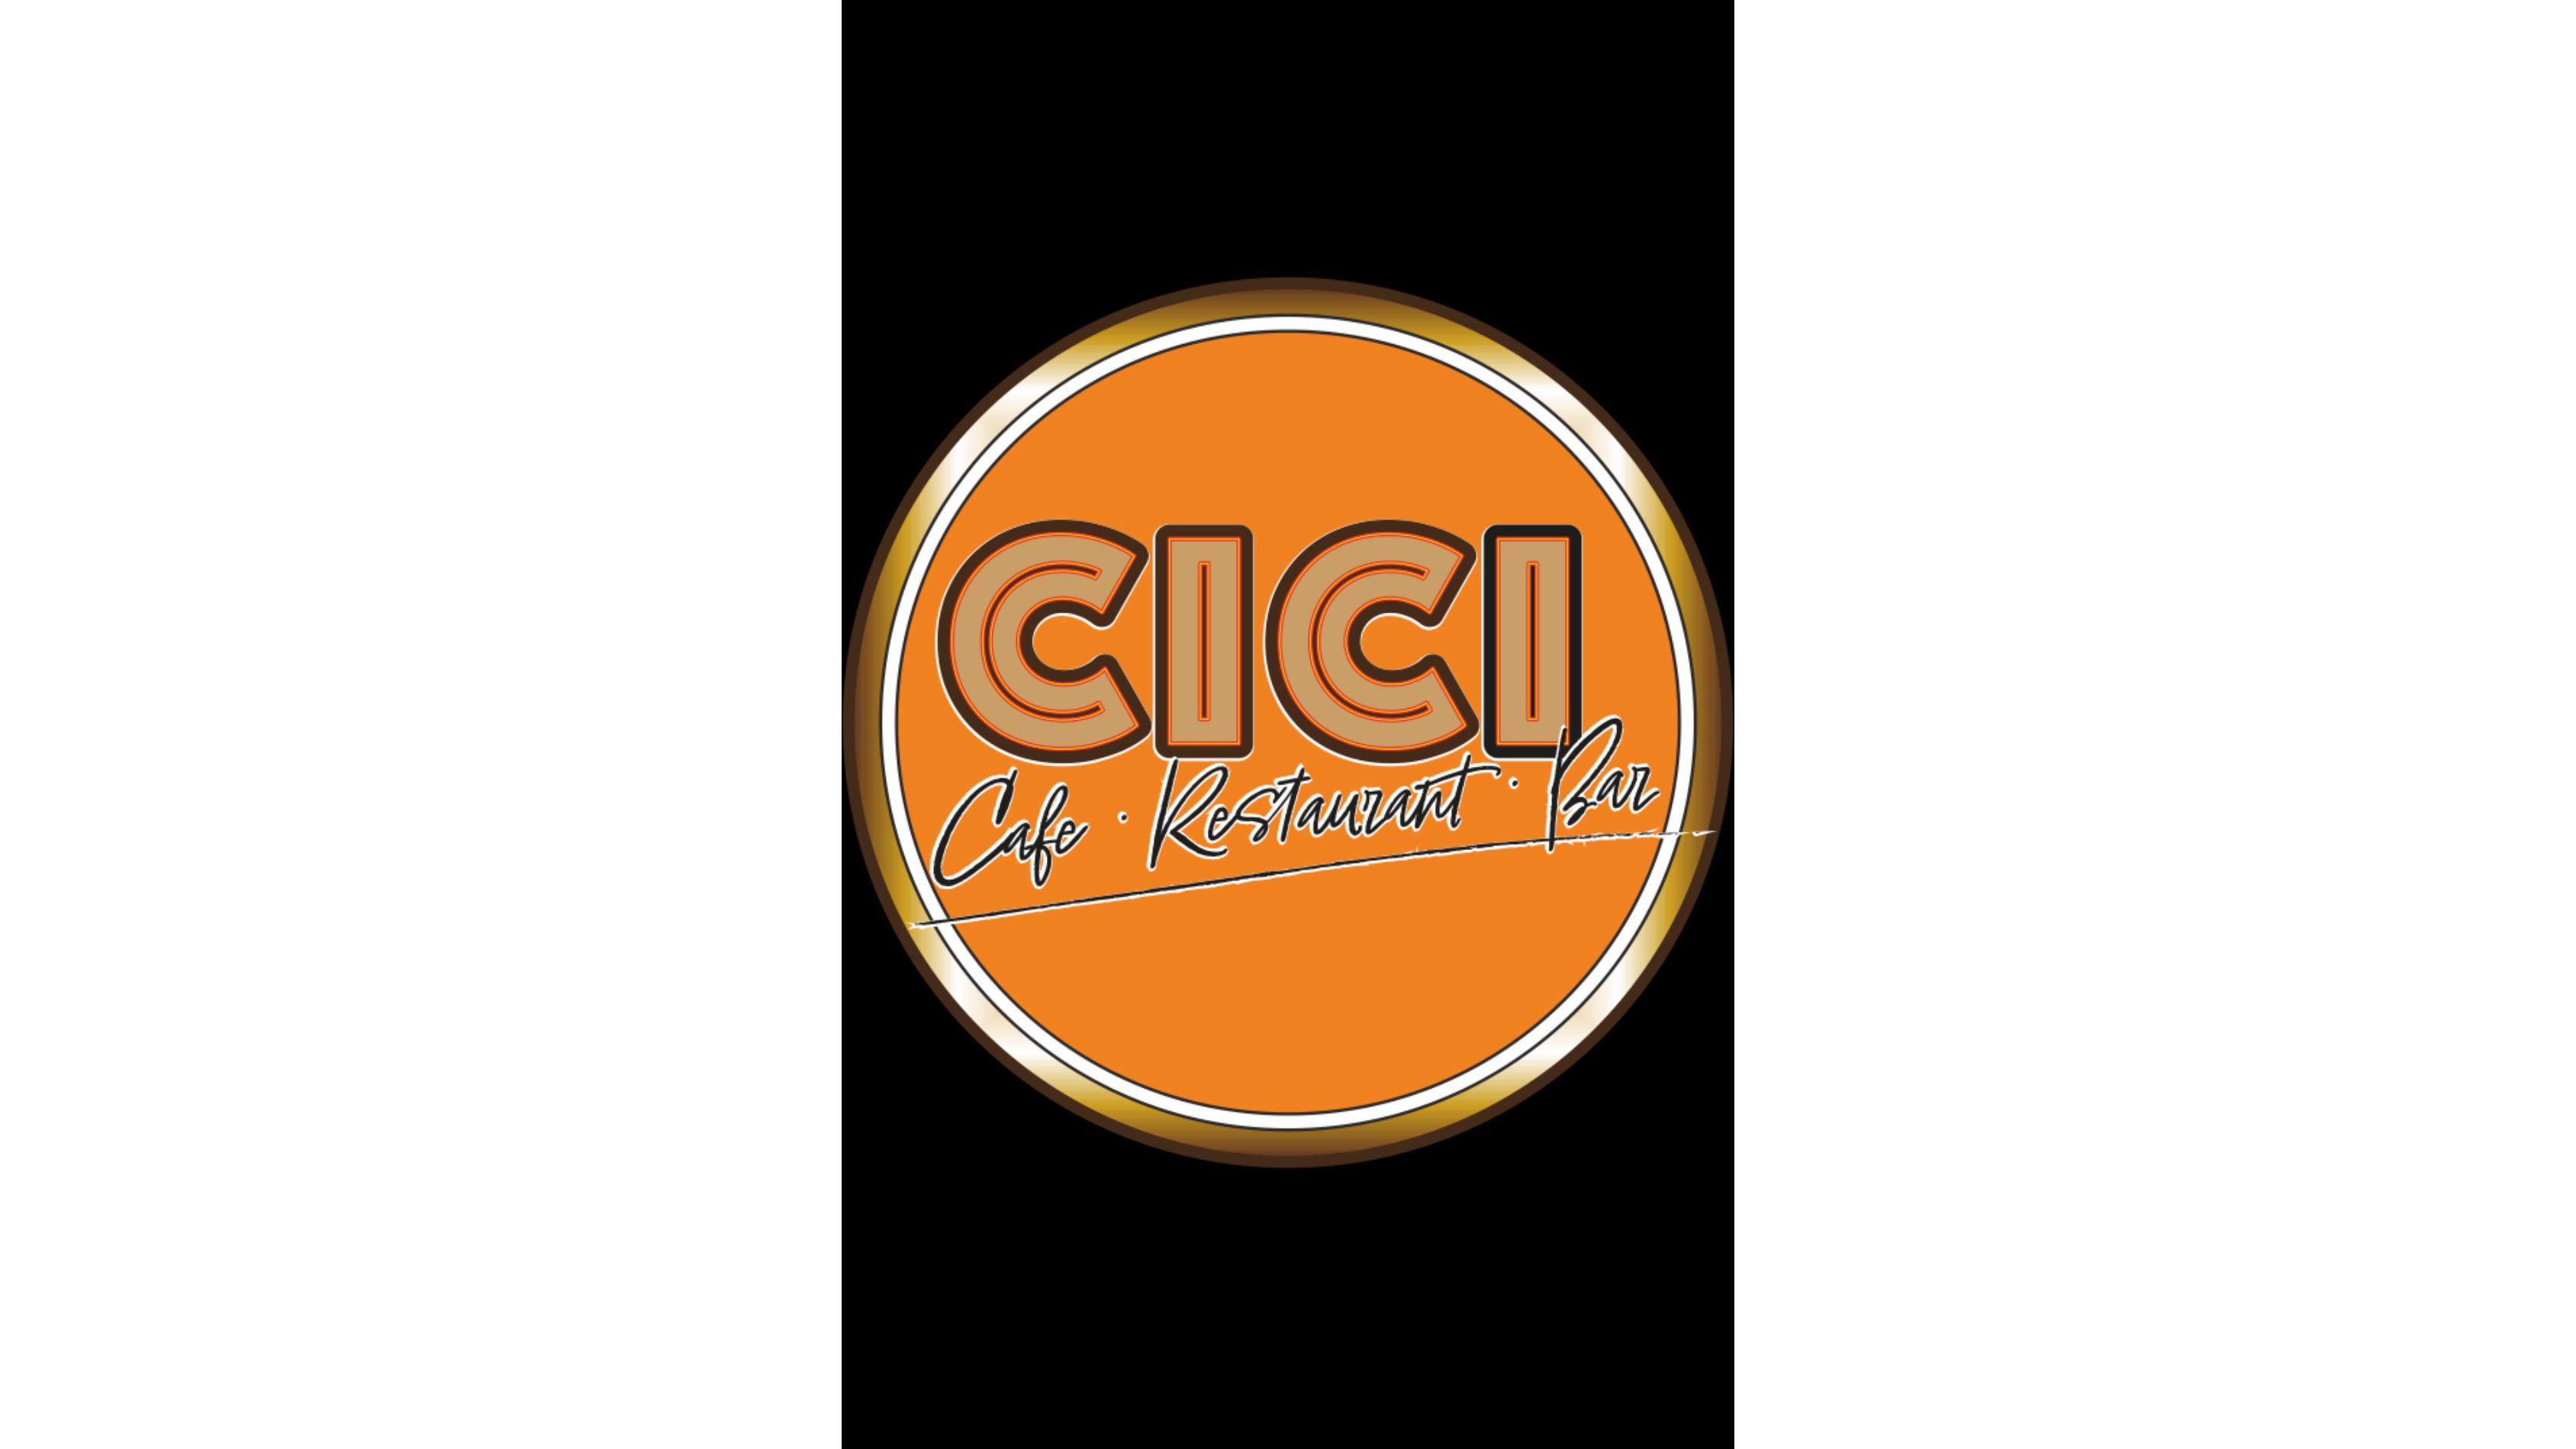 Bild der Café Cici